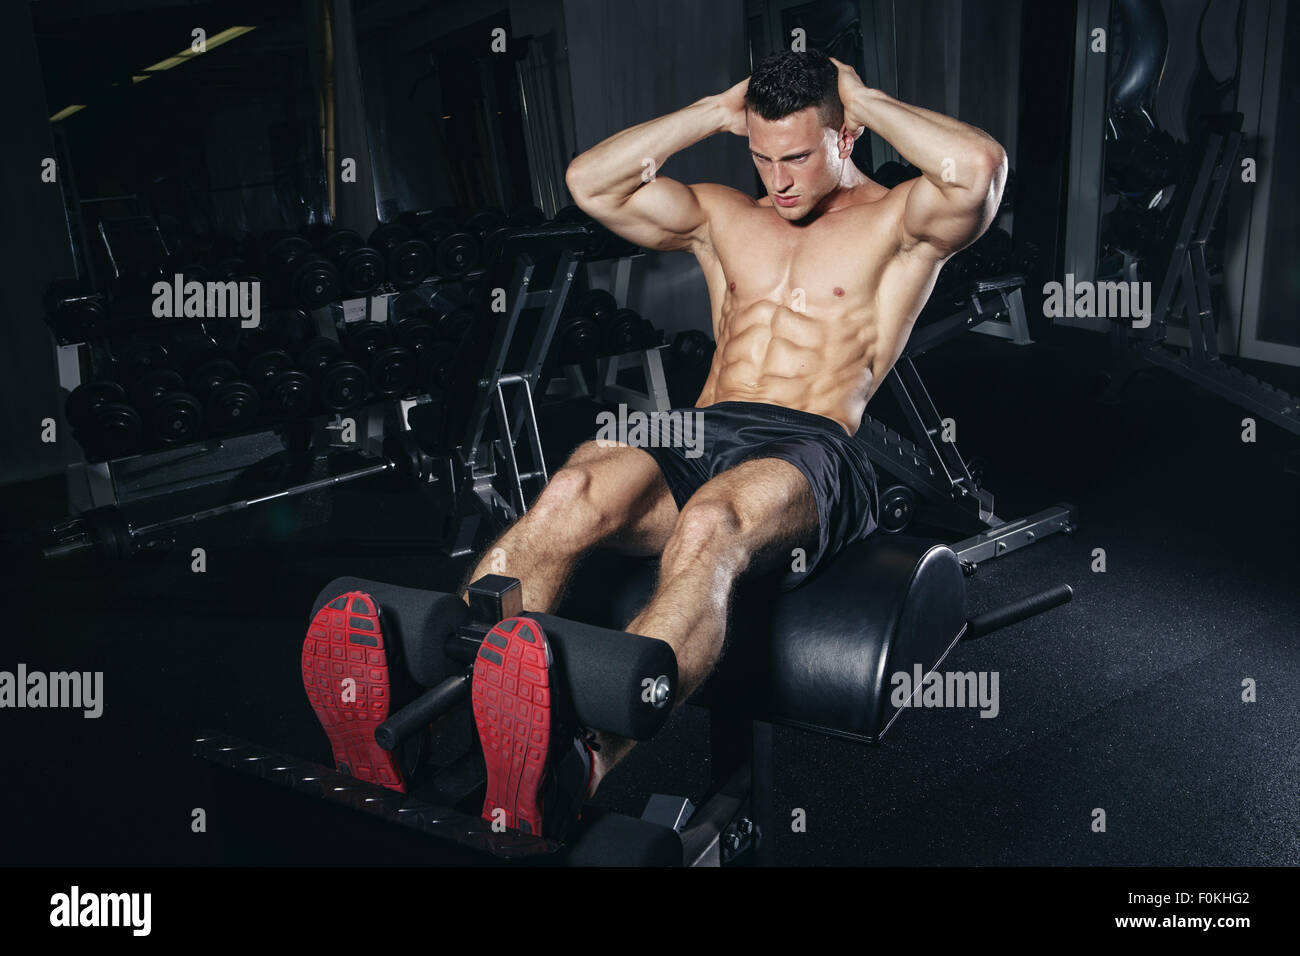 Physical athlete exercising with glute ham developer Stock Photo